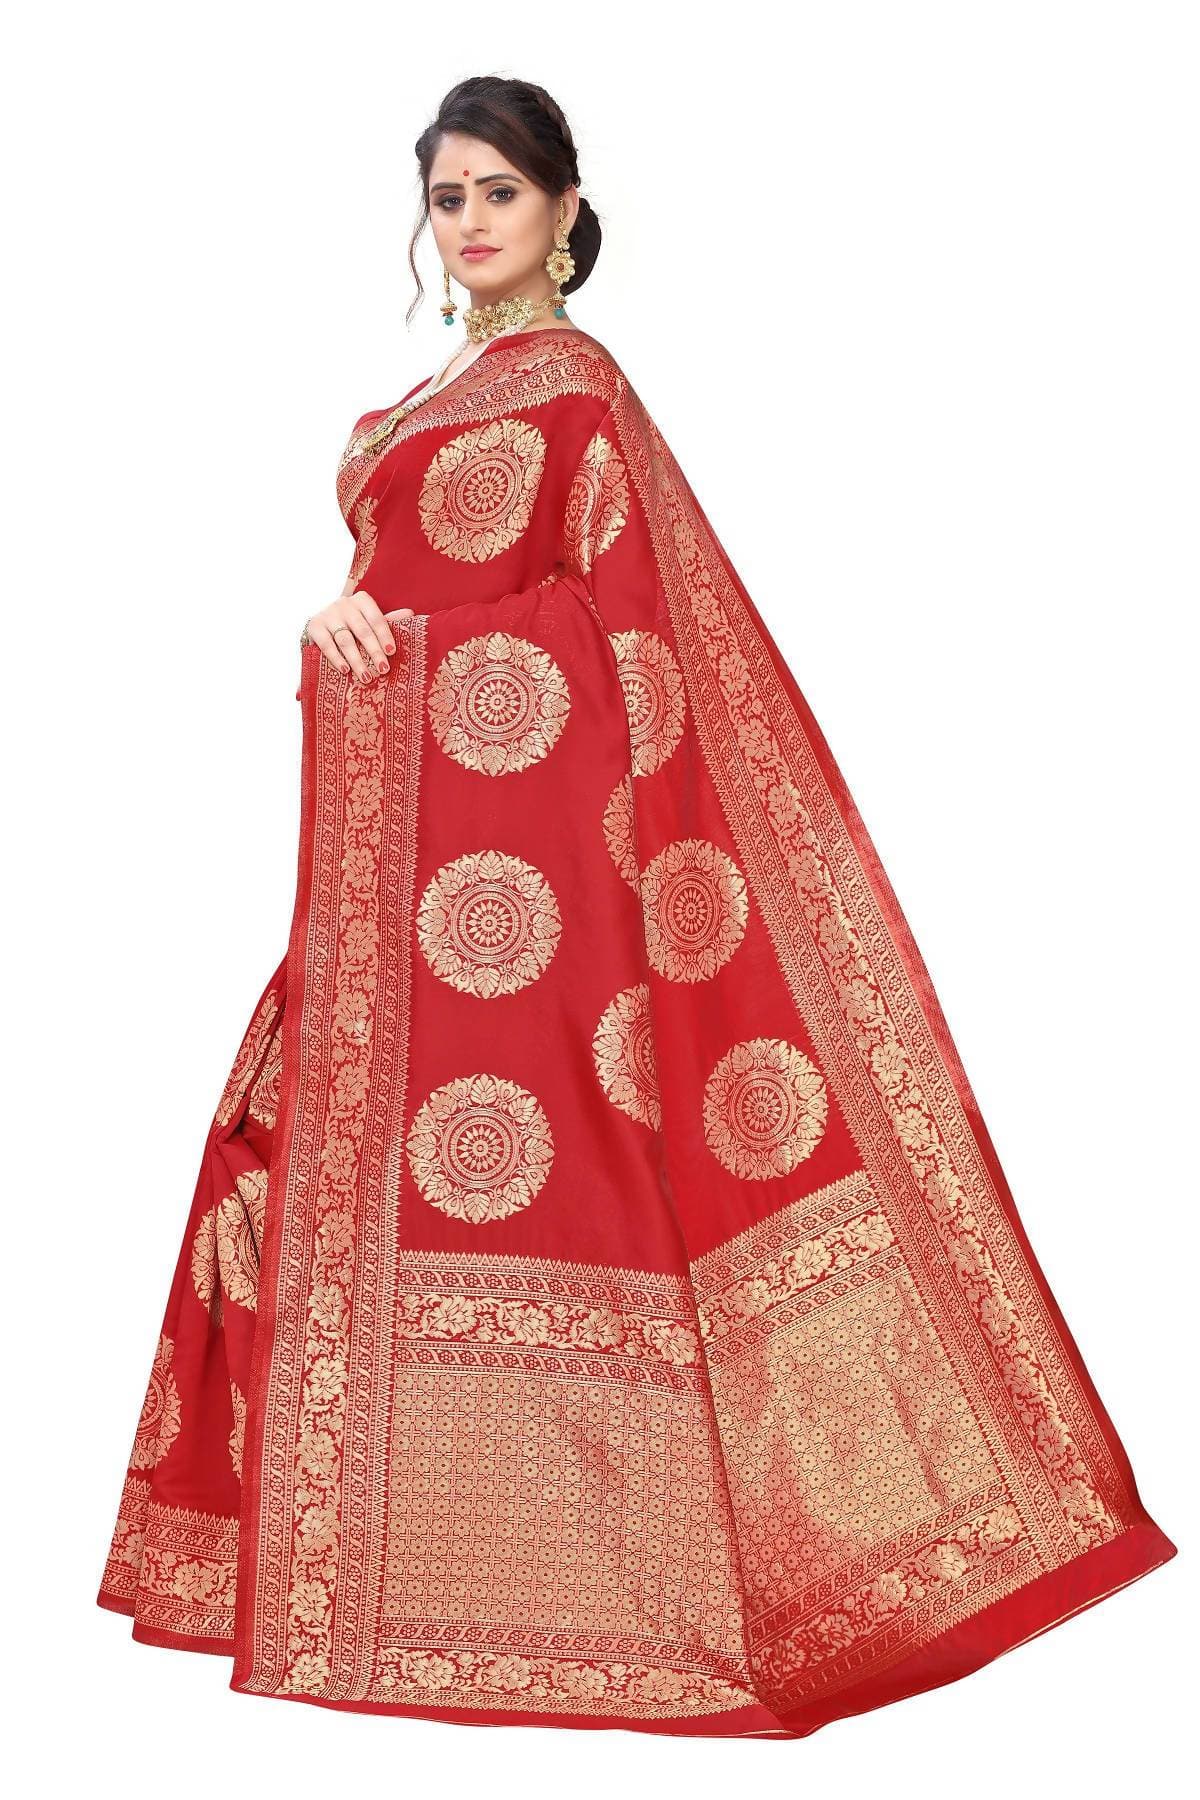 Vamika Latest Banarasi Jacquard Weaving Red Saree